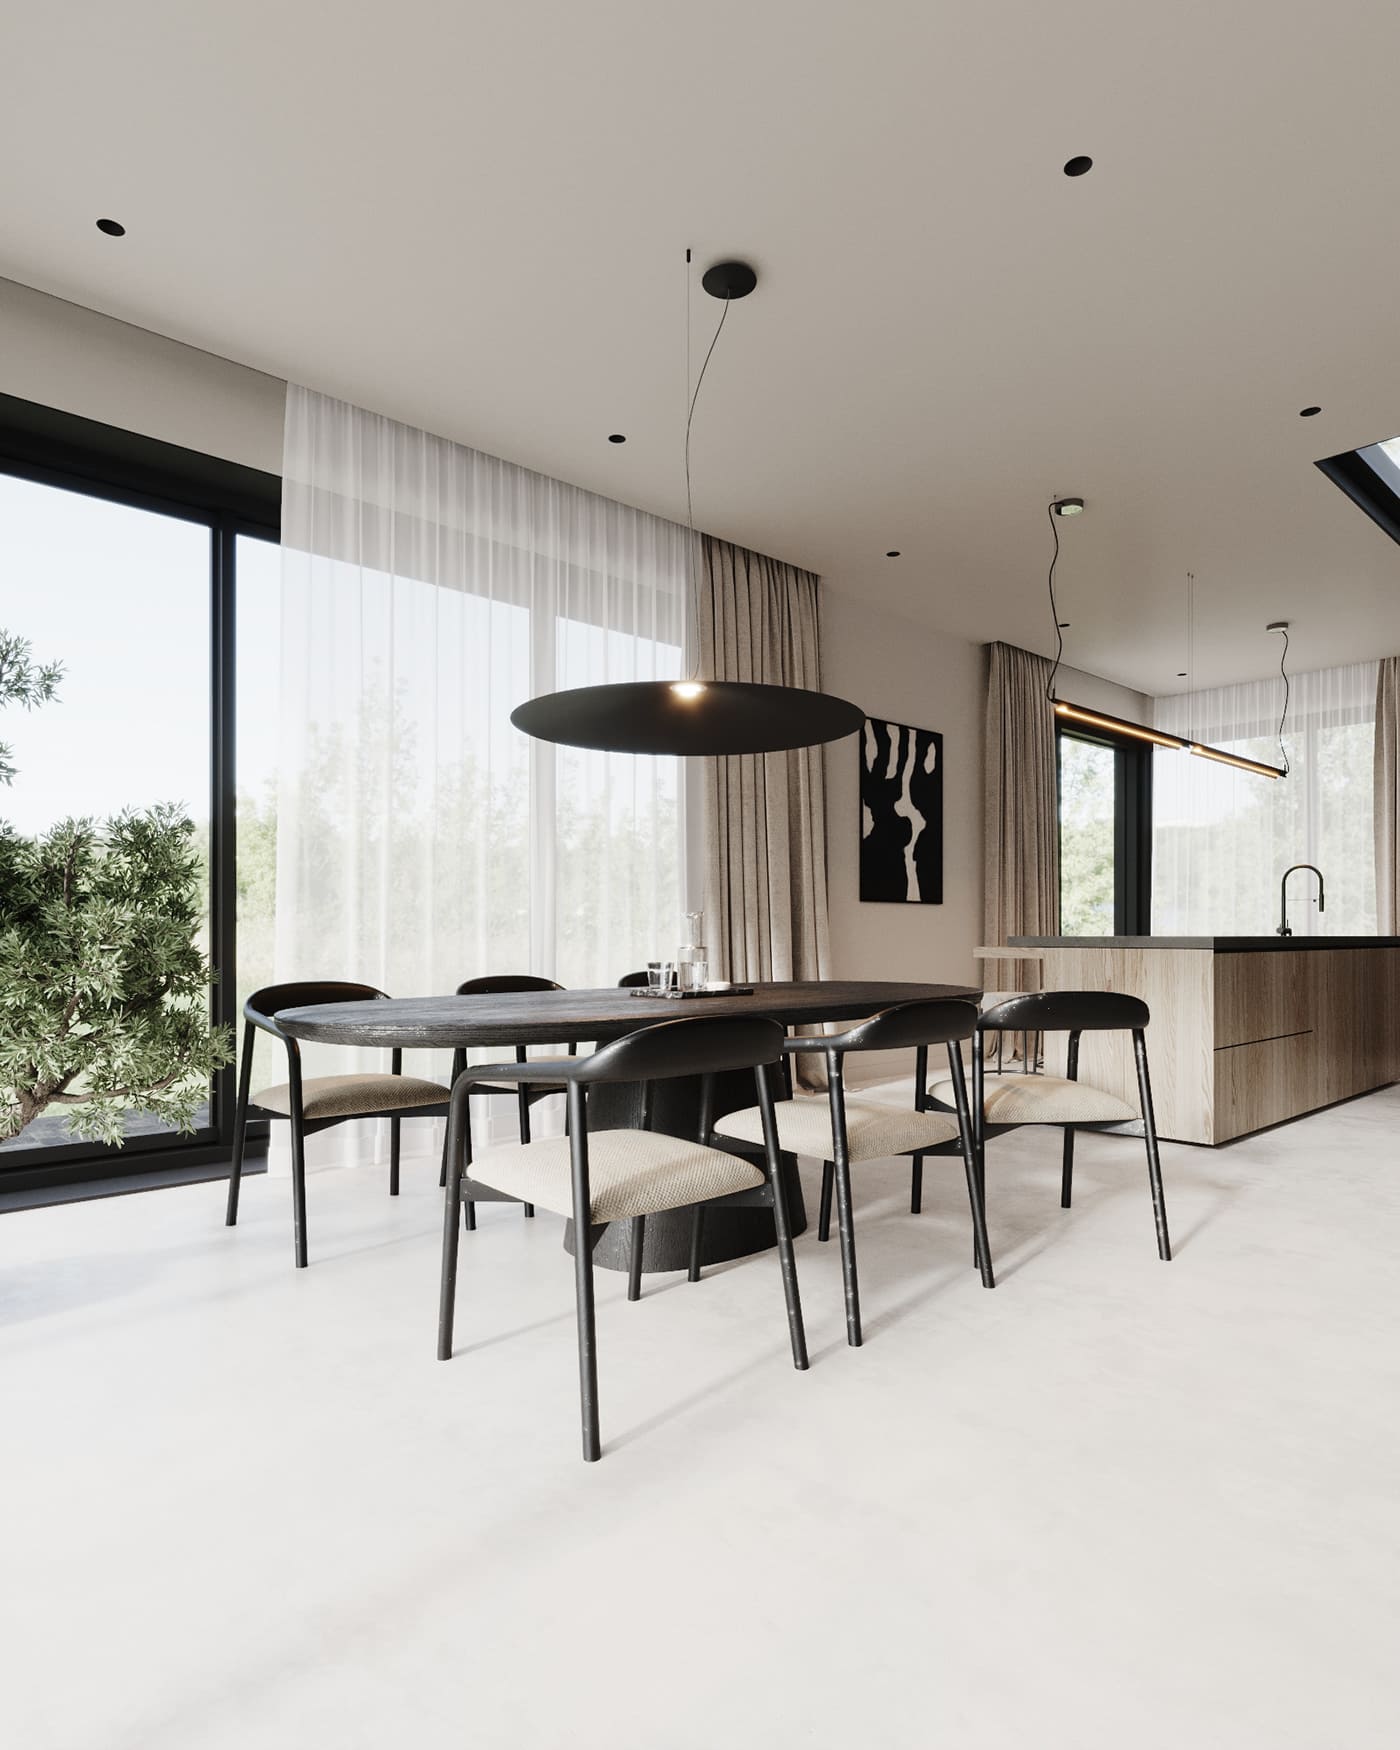 Spacious apartment in minimalist style